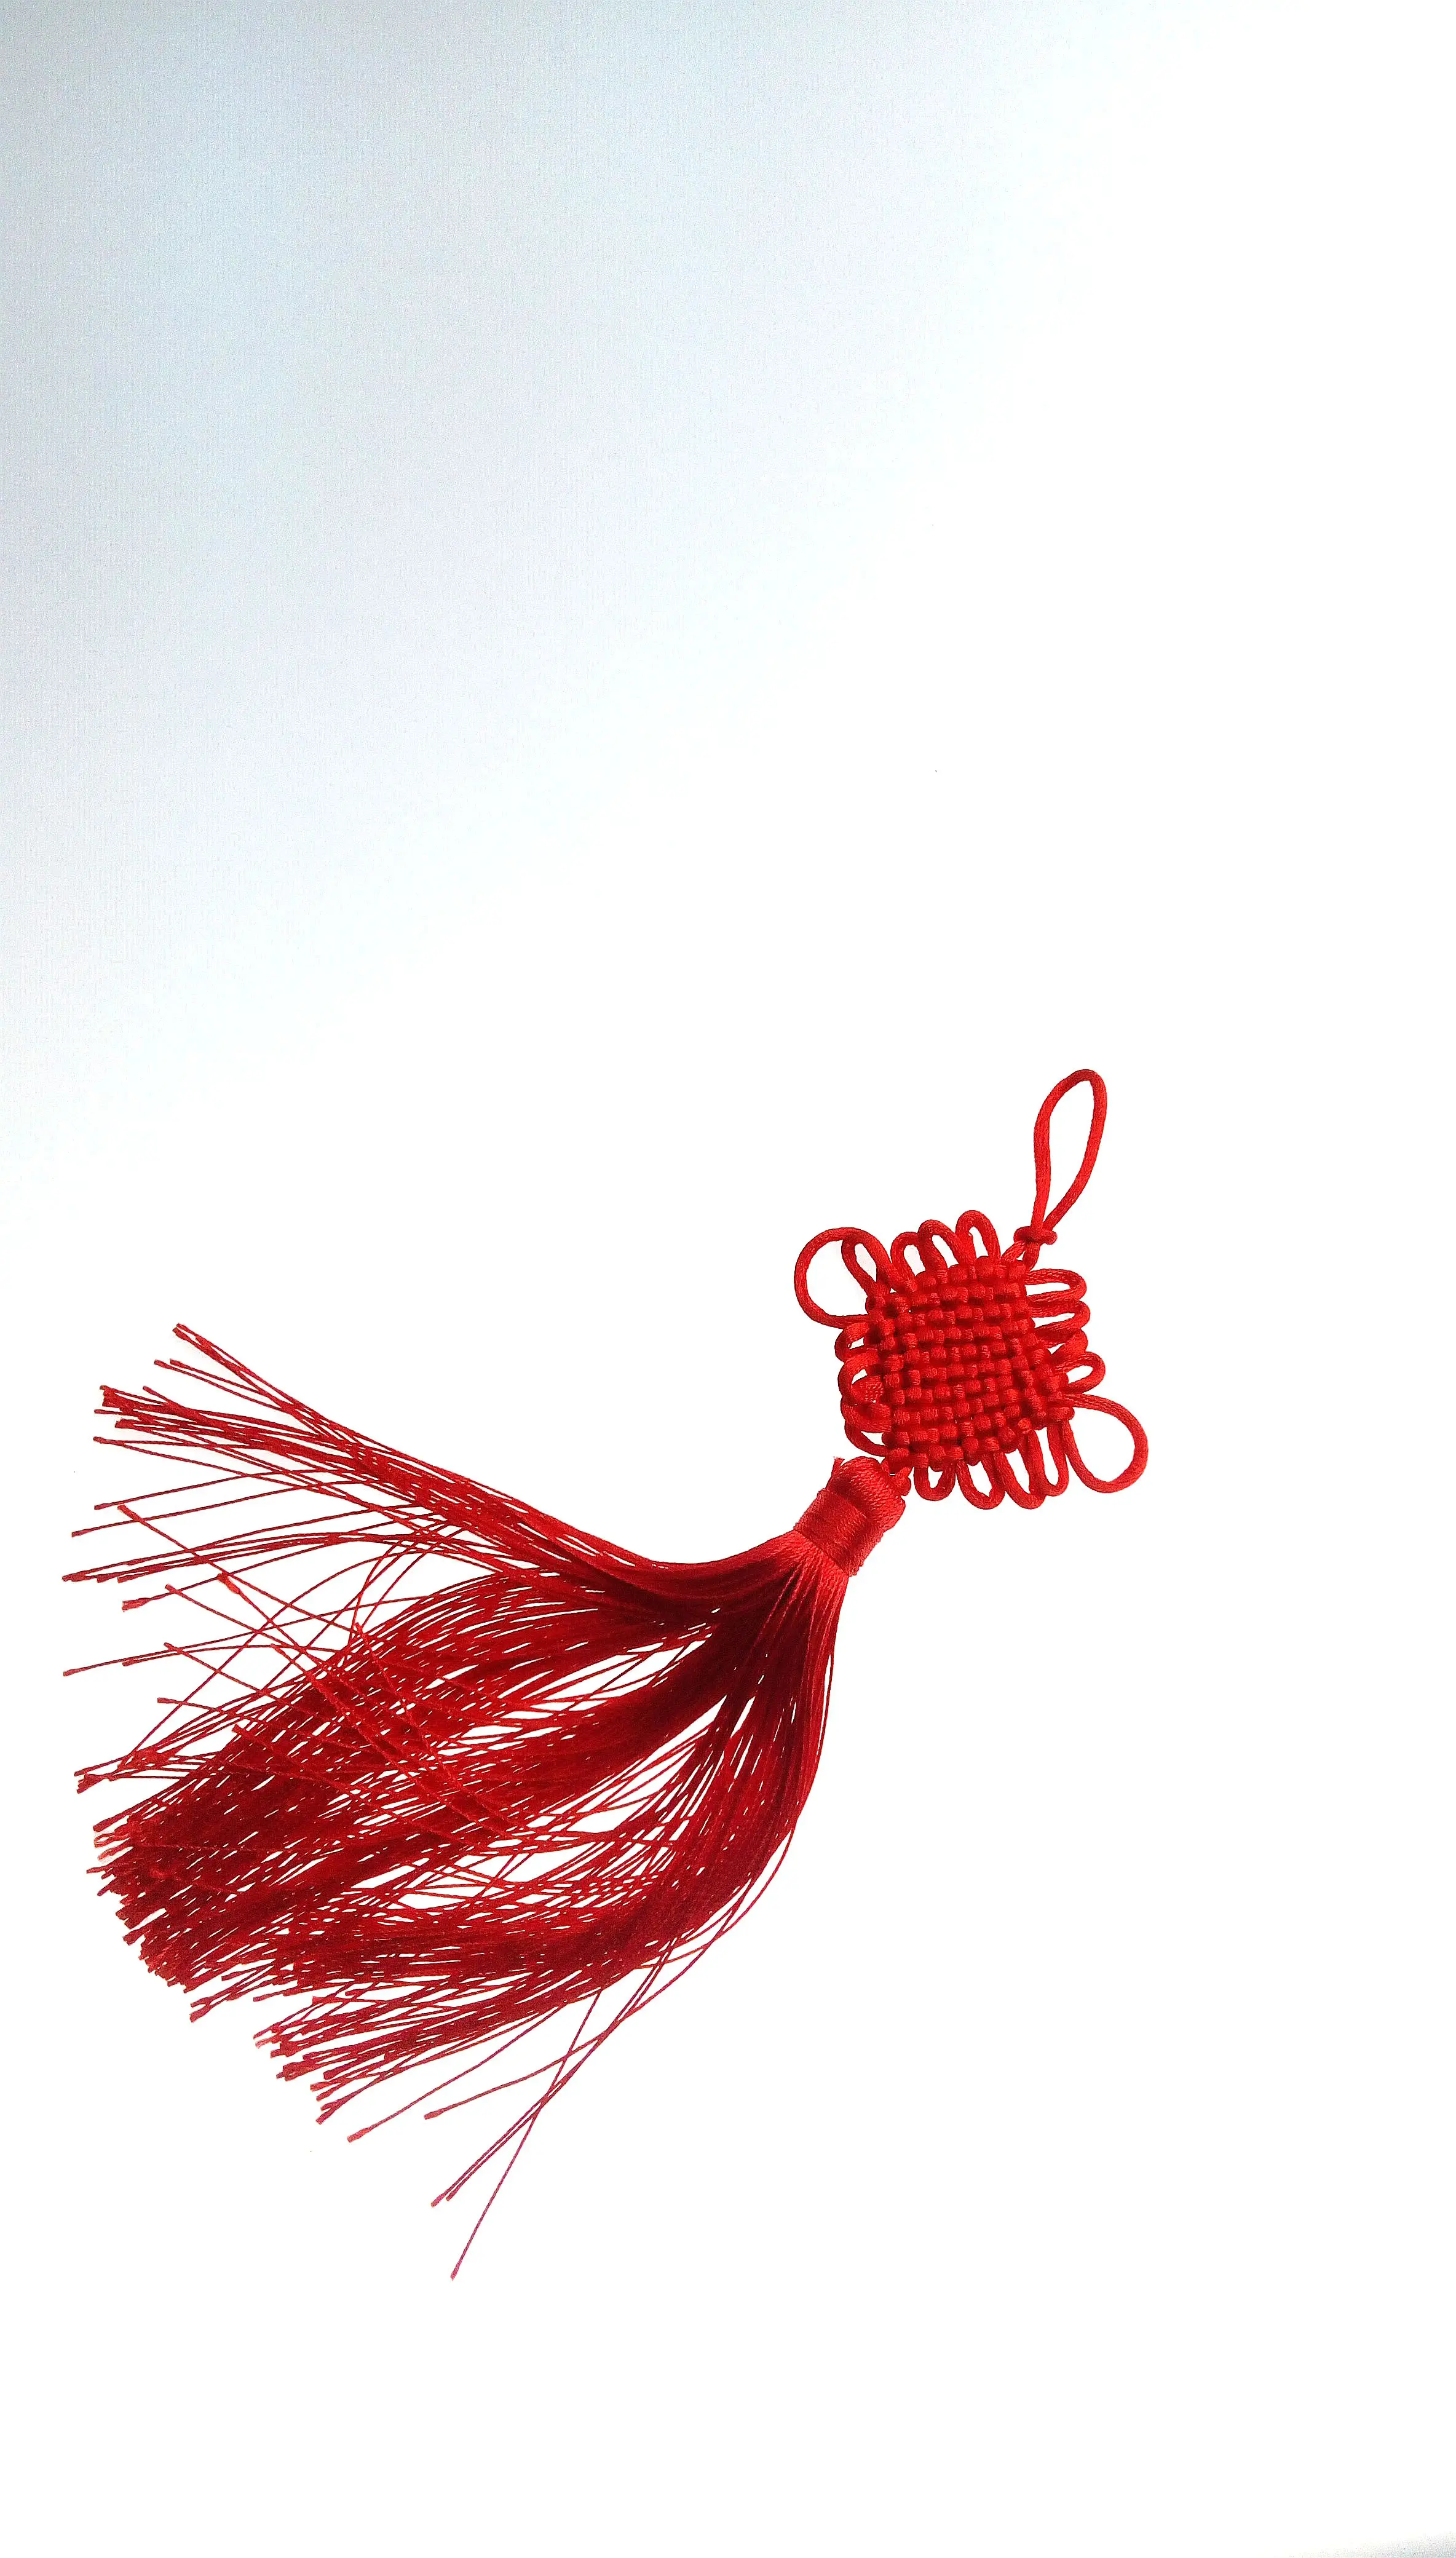 
Wholesale handmade polyester Chinese knot tassel 